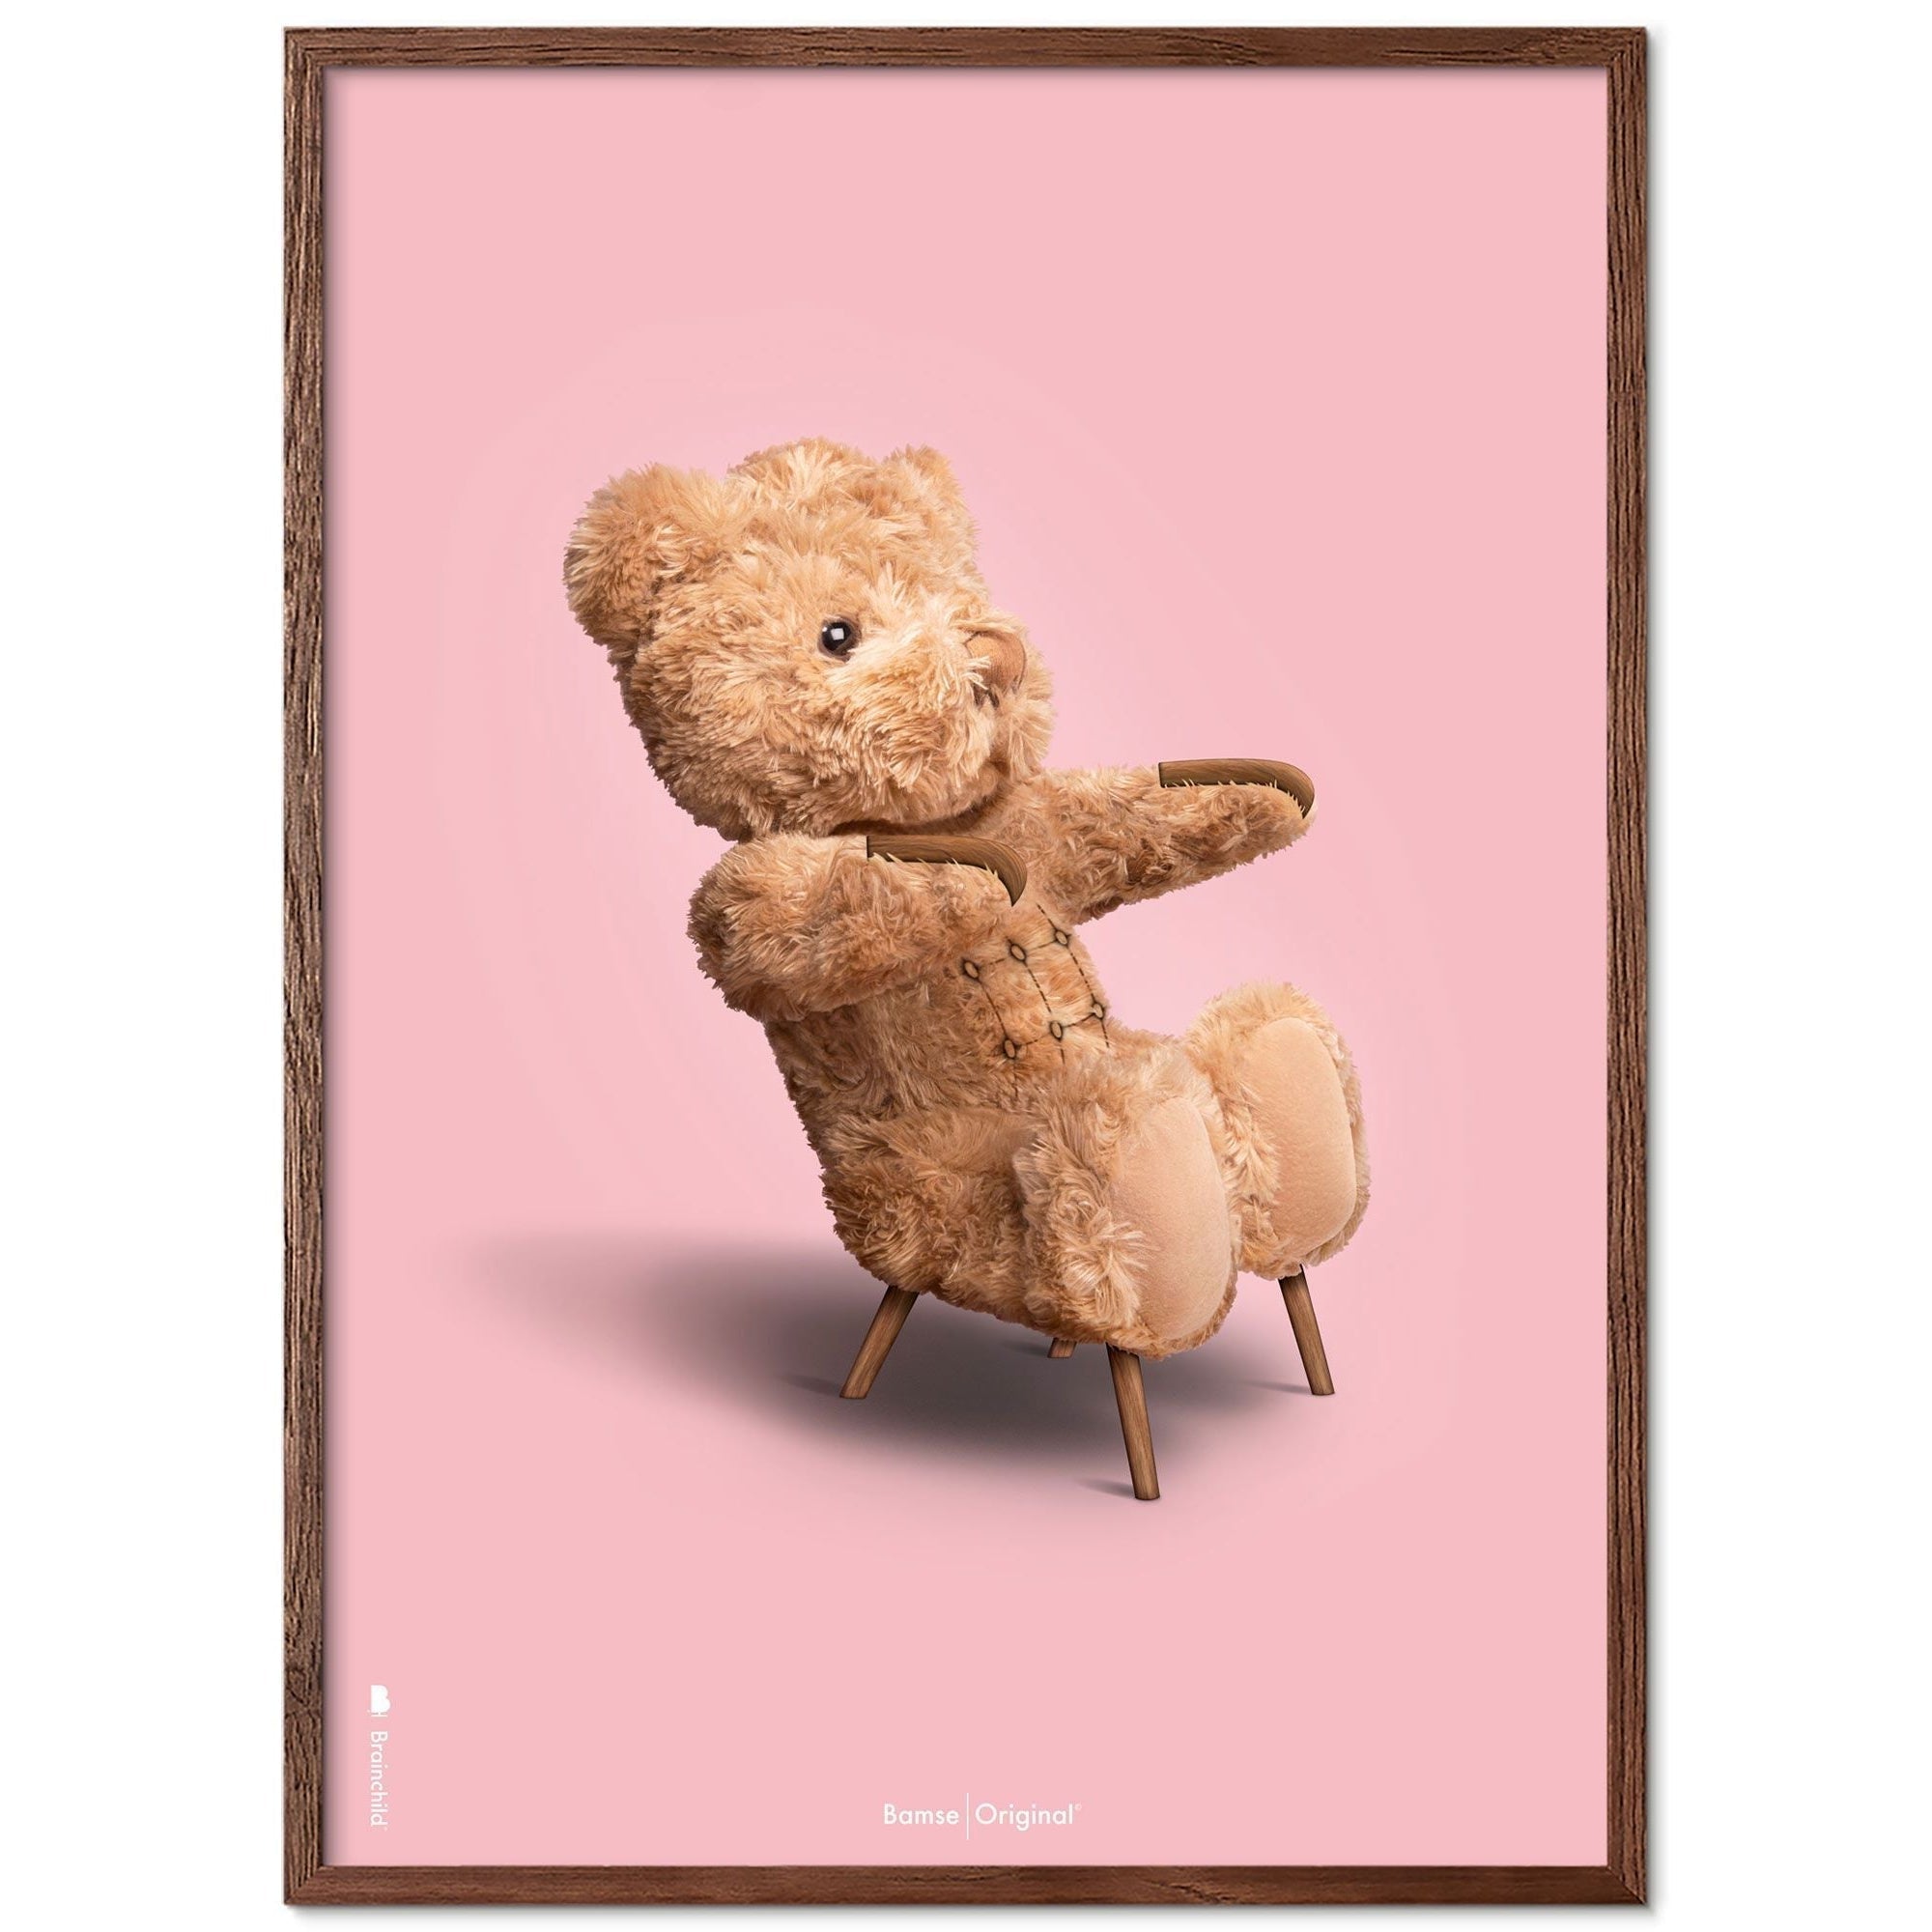 Brainchild Teddybeer klassiek poster frame gemaakt van donker hout ram 30x40 cm, roze achtergrond